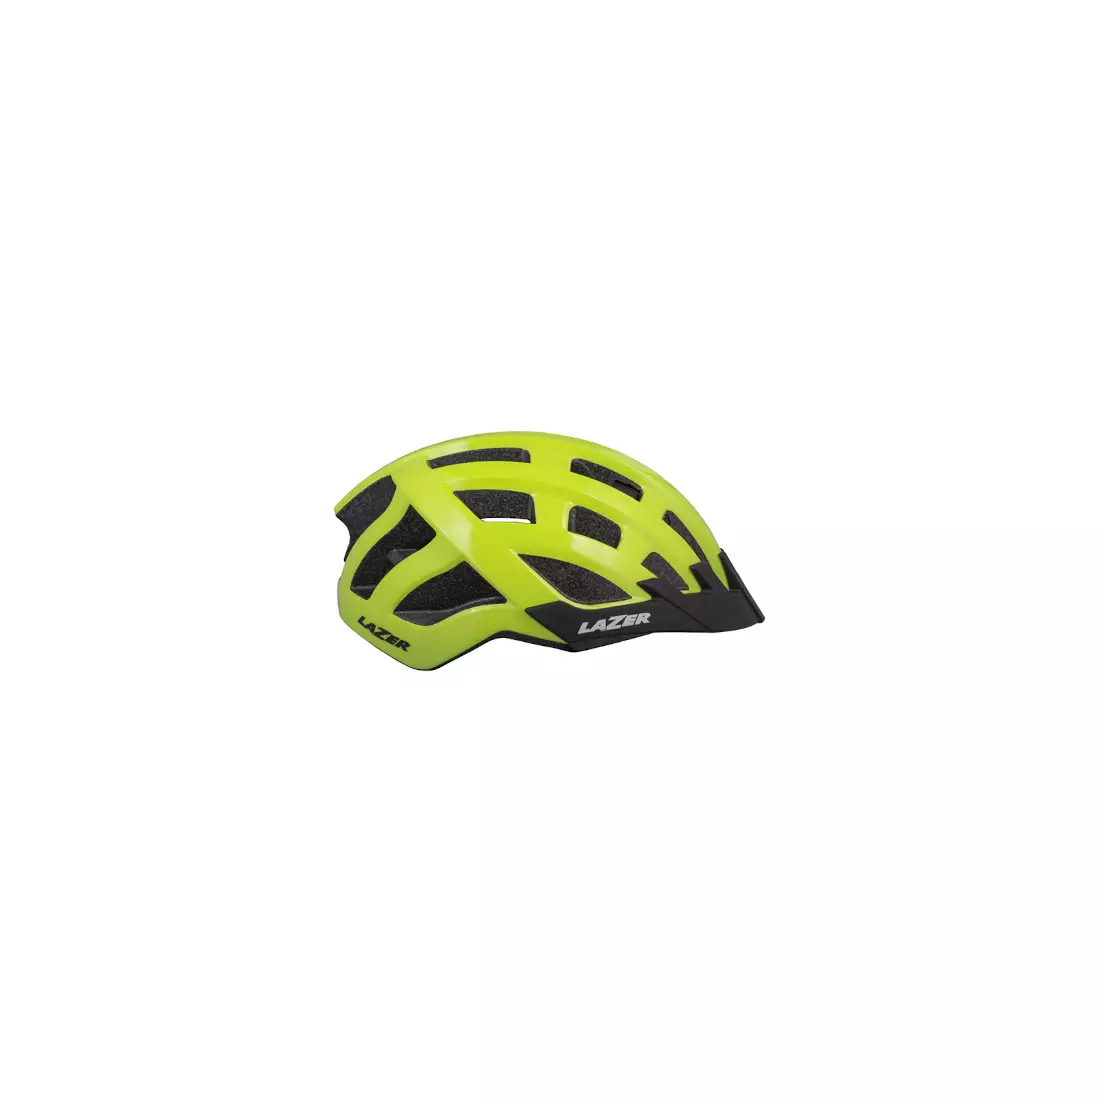 LAZER sportovní cyklistická helma PETIT DLX Flash Yellow Uni BLC2197887193